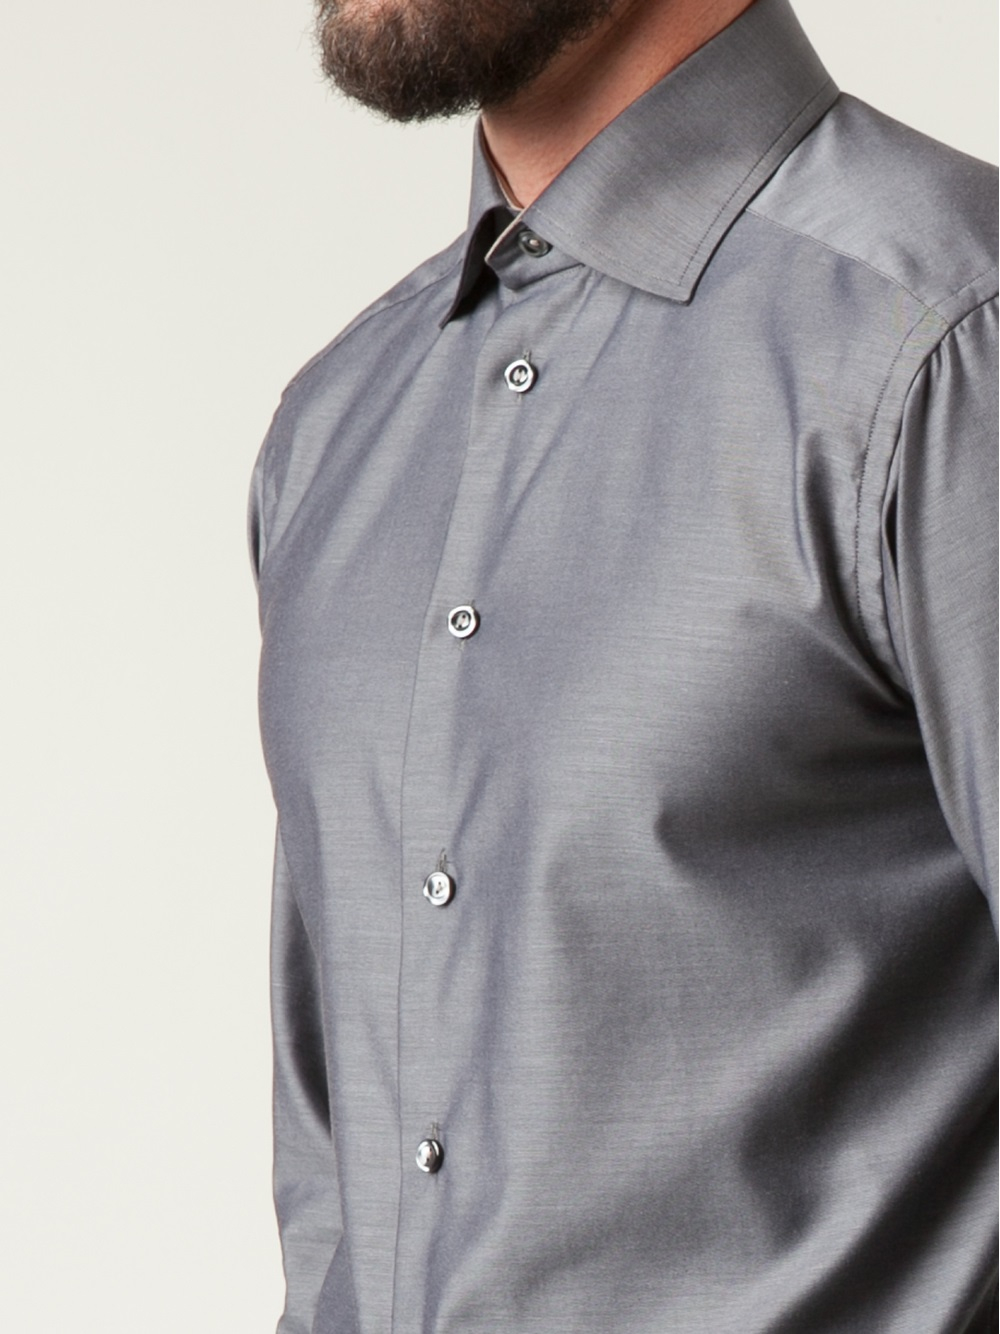 Eton of Sweden Button Down Shirt in Grey (Gray) for Men - Lyst